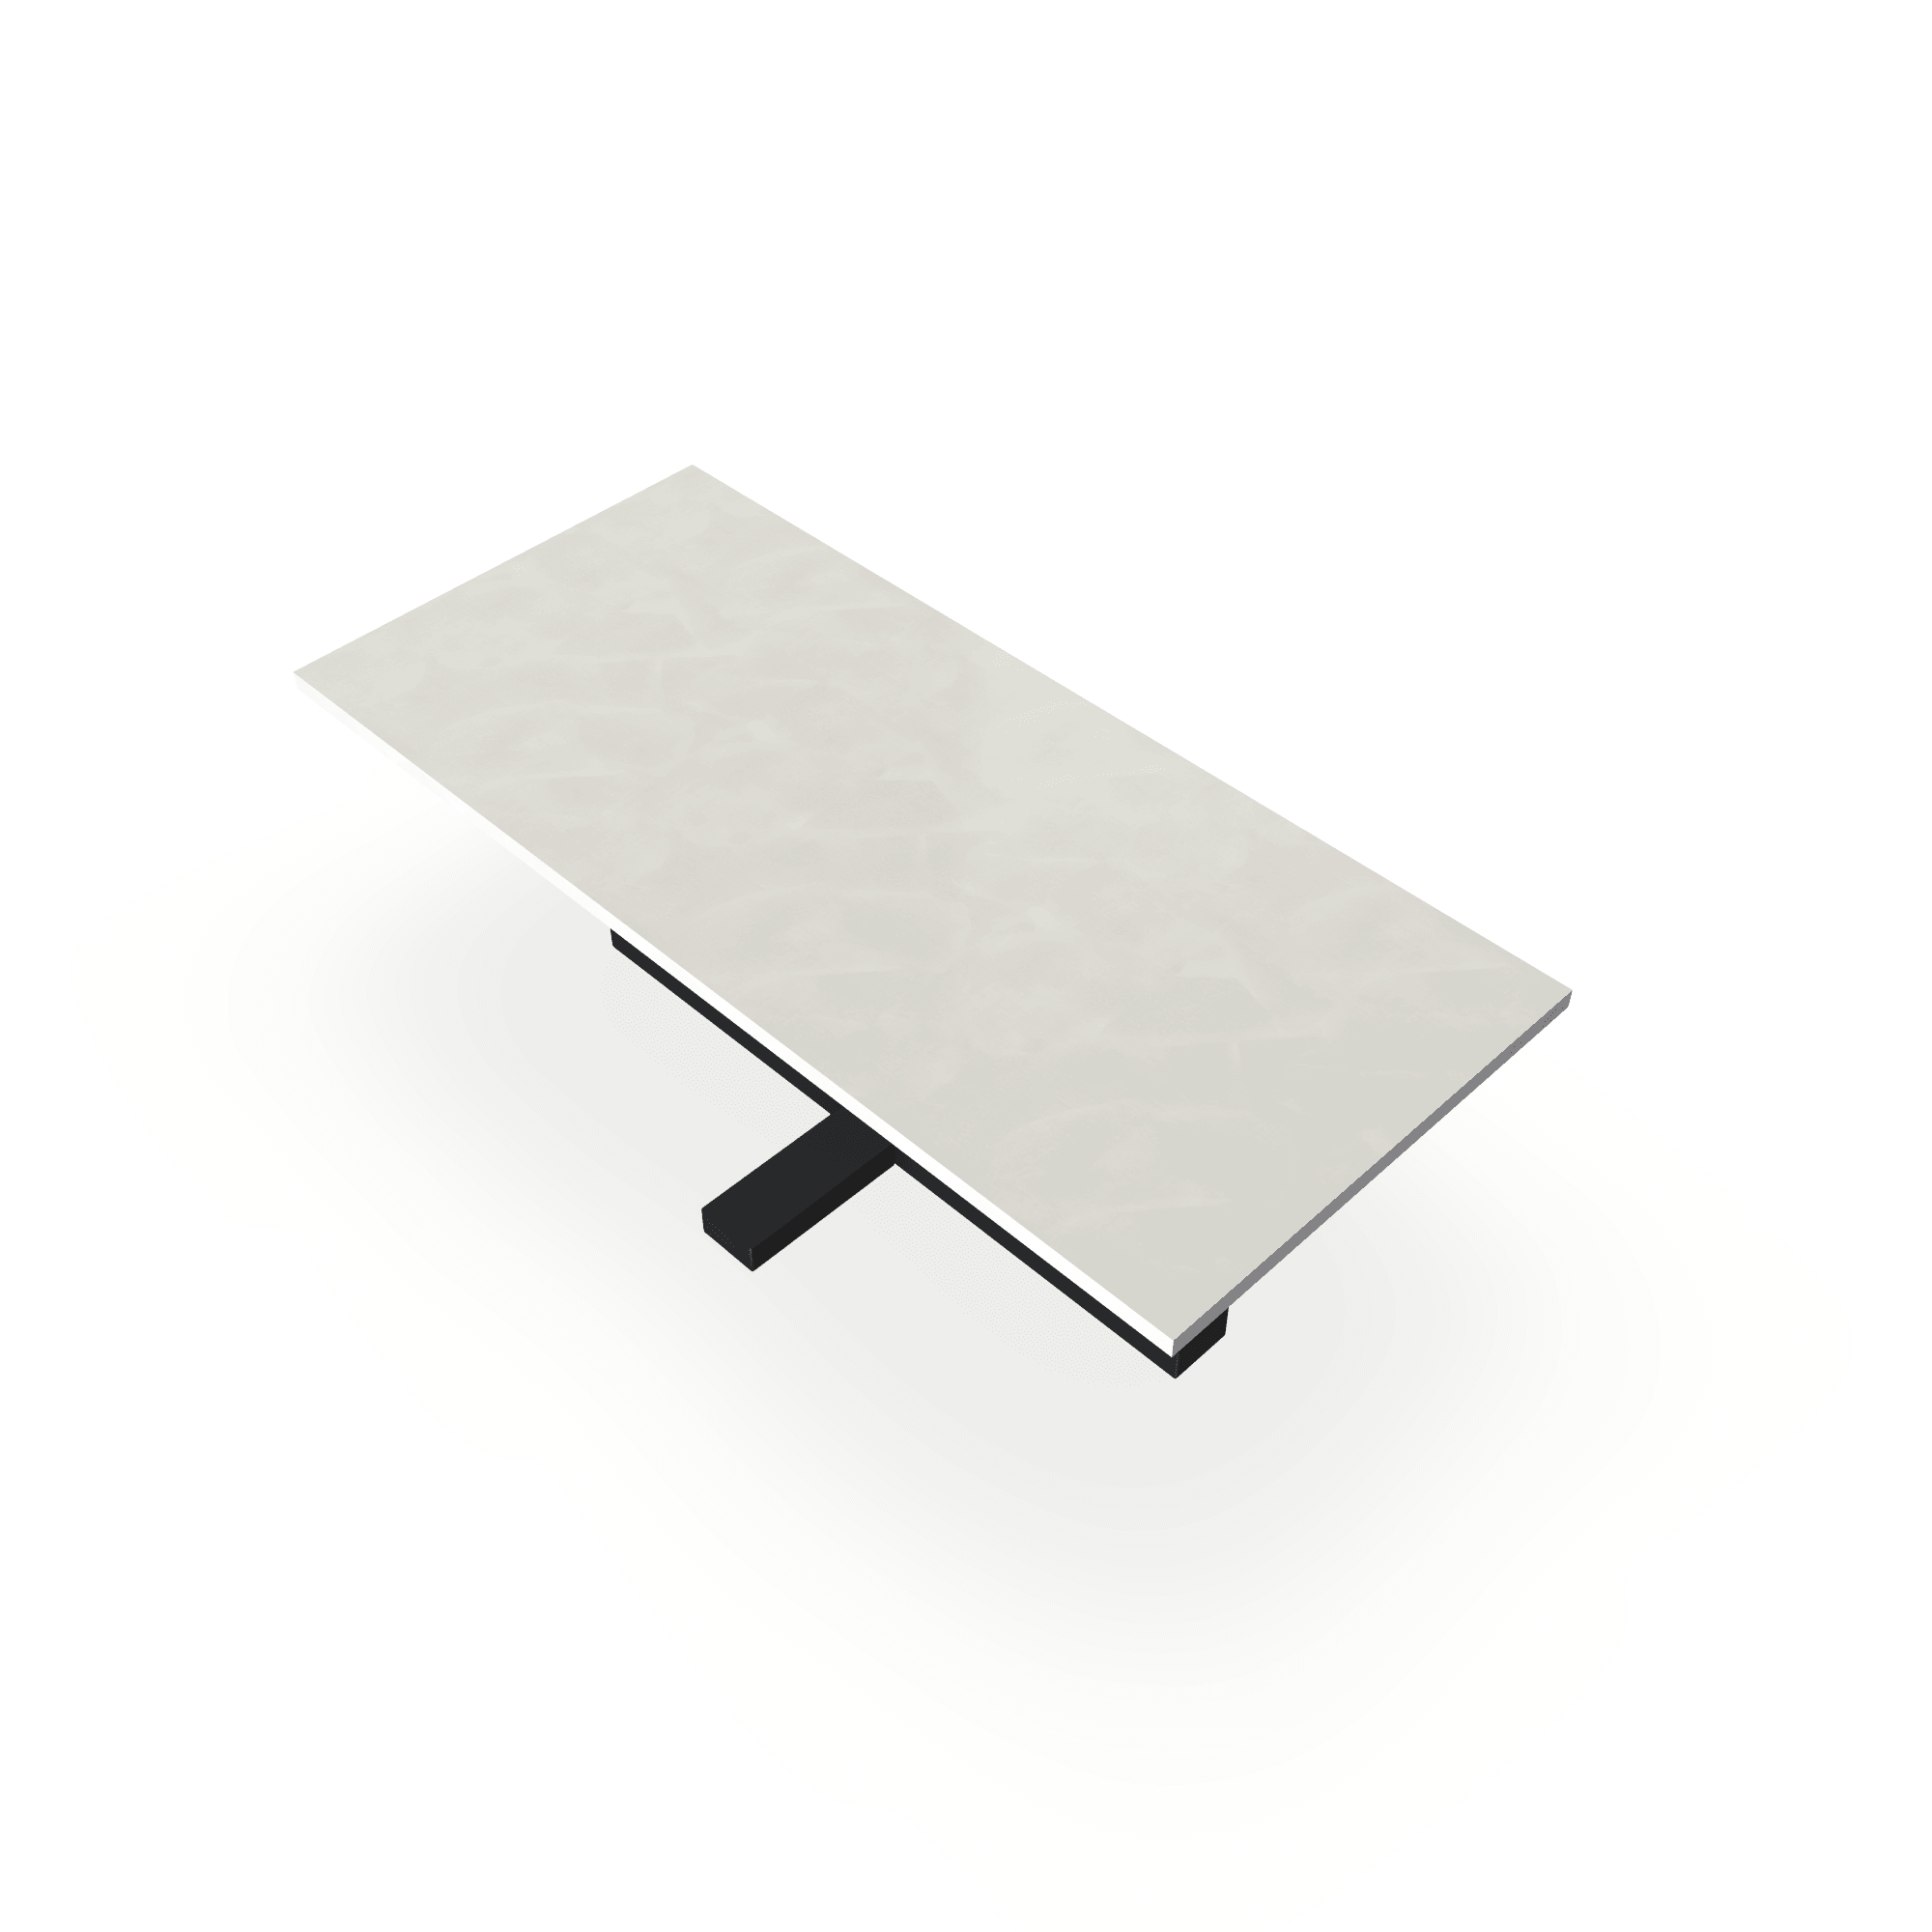 Eettafel Beton Creamy White - Recht - Halve Plus Onderstel Mat Zwart - {{ product.type }} - Kas20